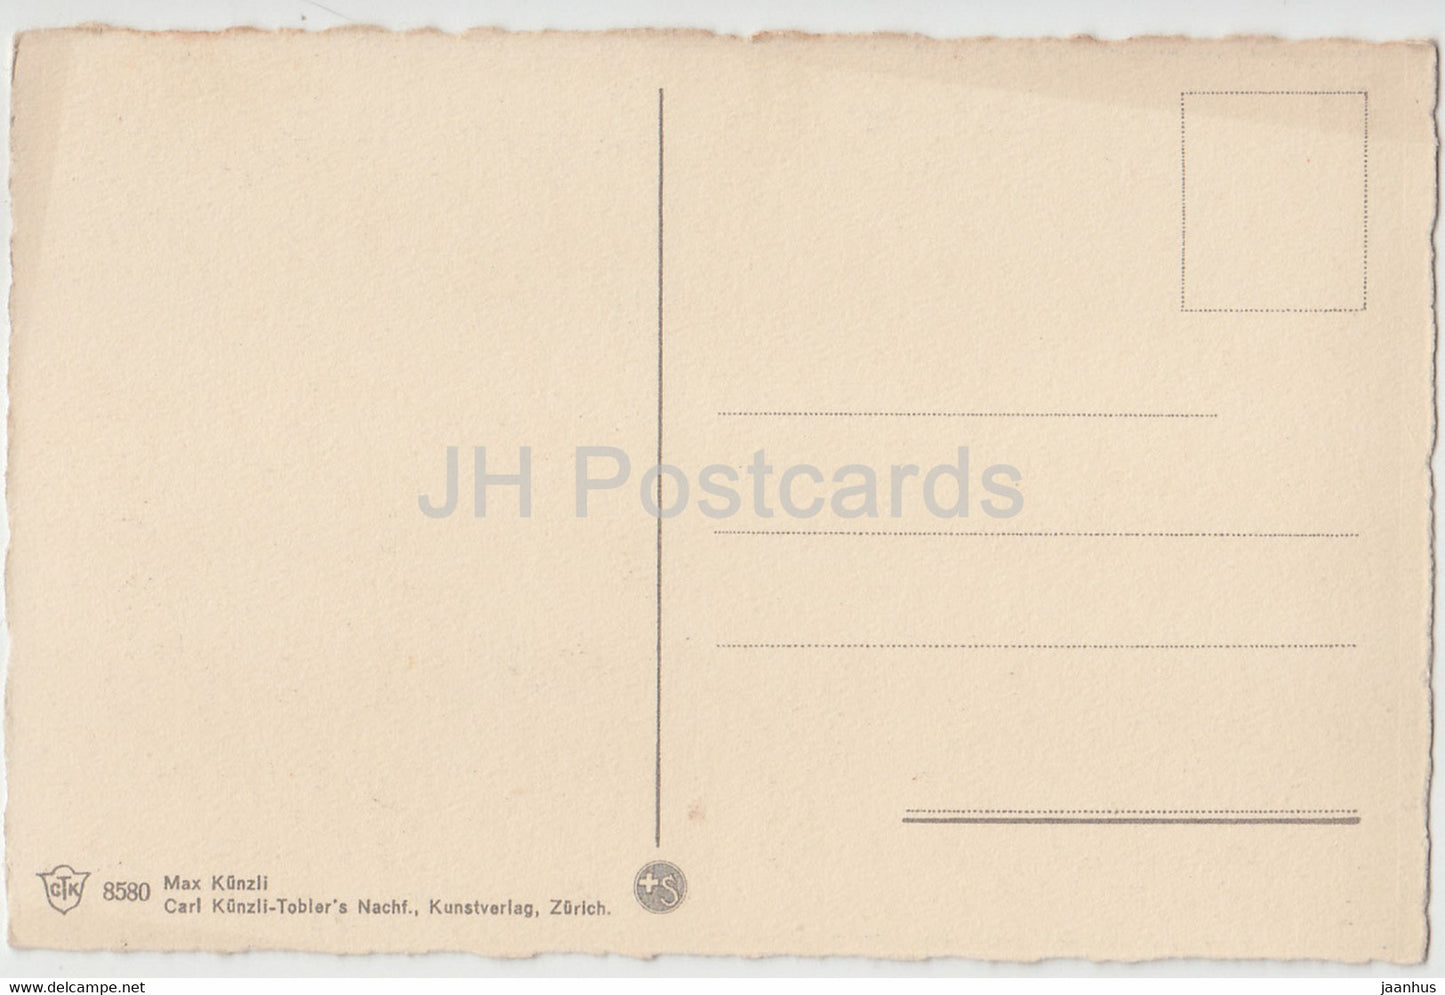 Locarno - 8580 - old postcard - Switzerland - unused